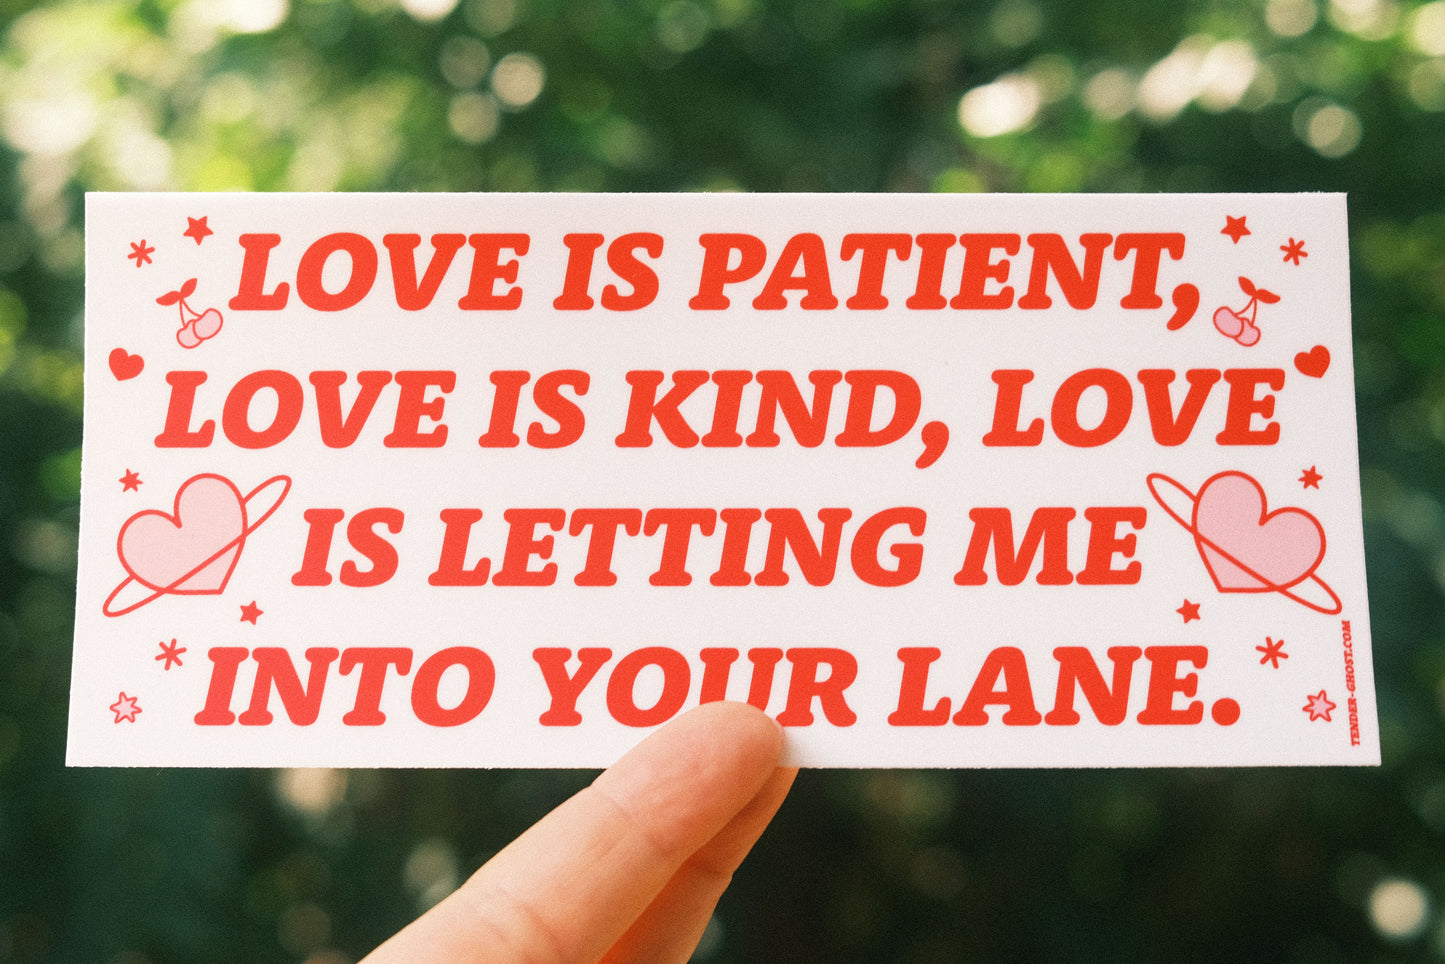 Love is Patient Bumper Sticker